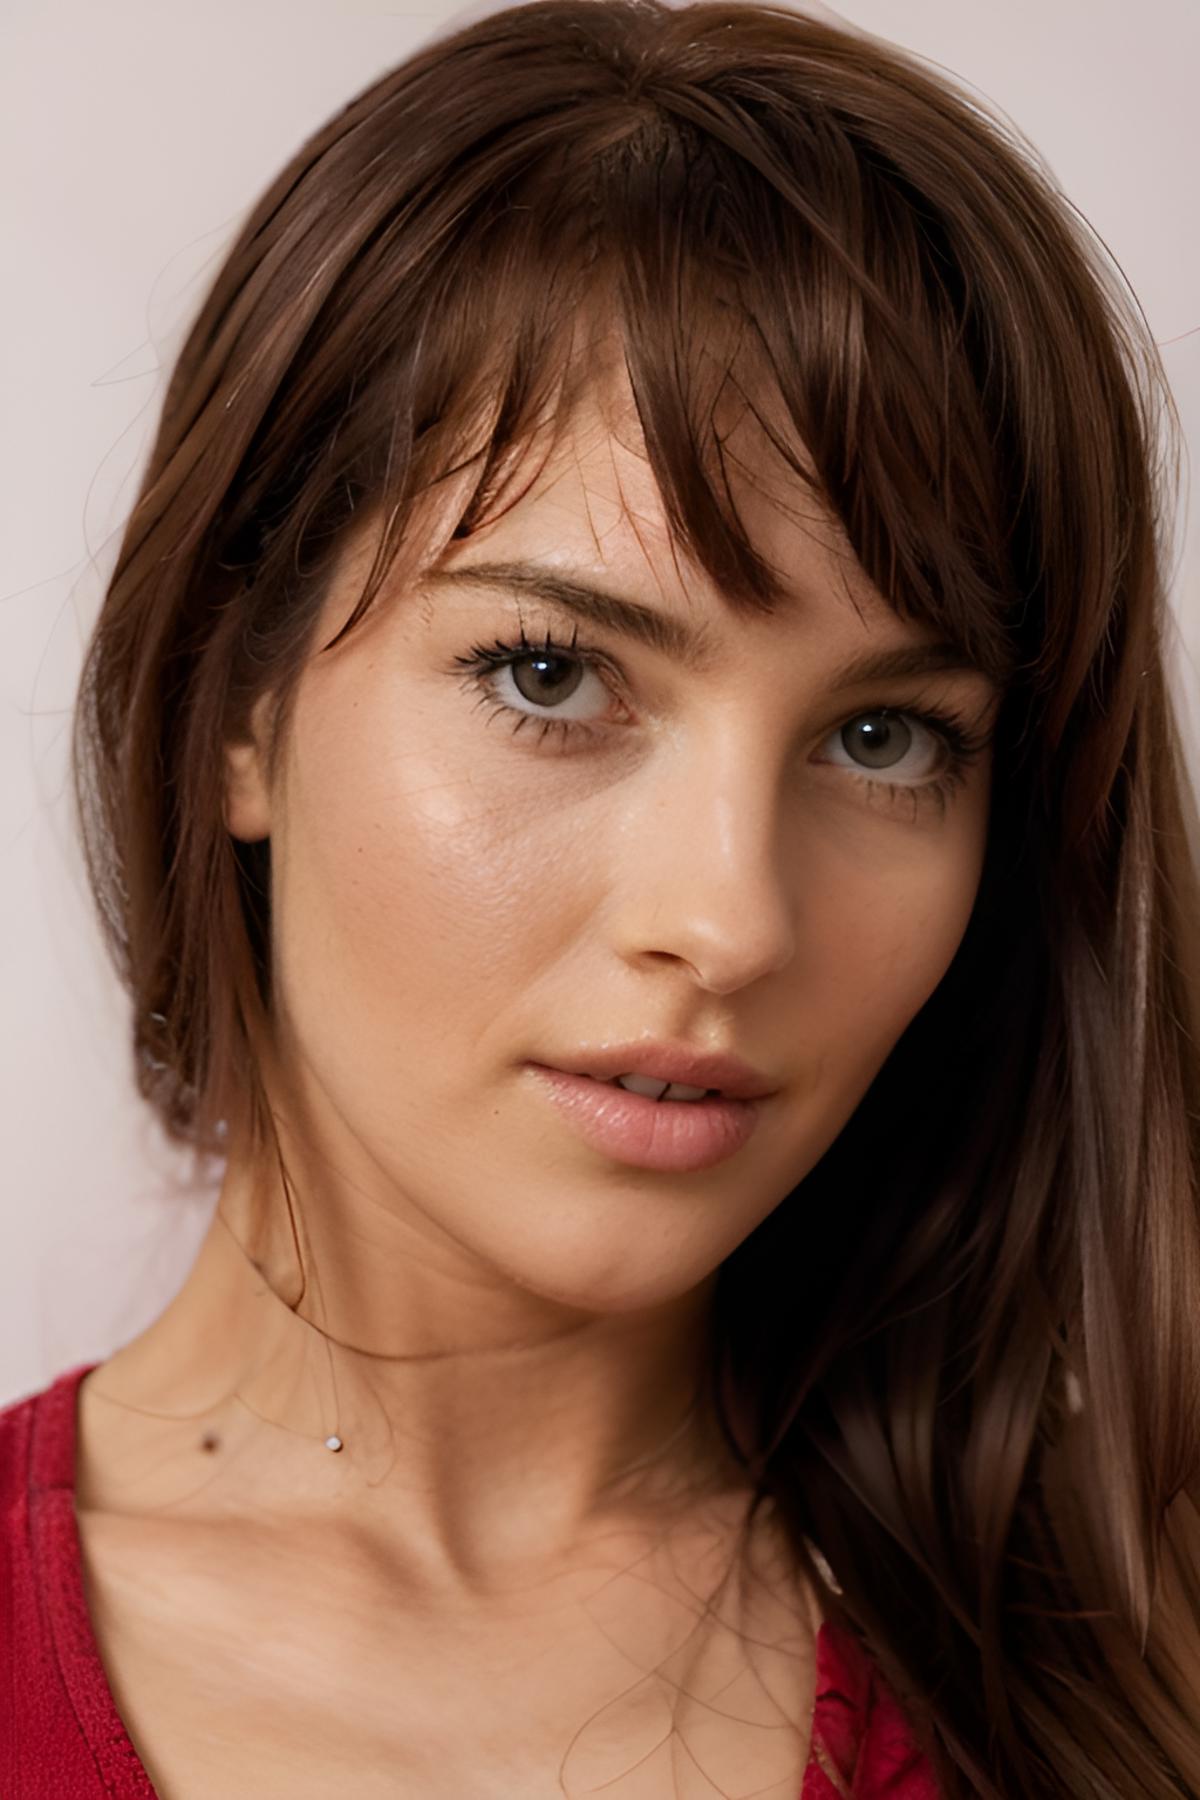 Sophia Sultry (Model) image by Smoke_Room